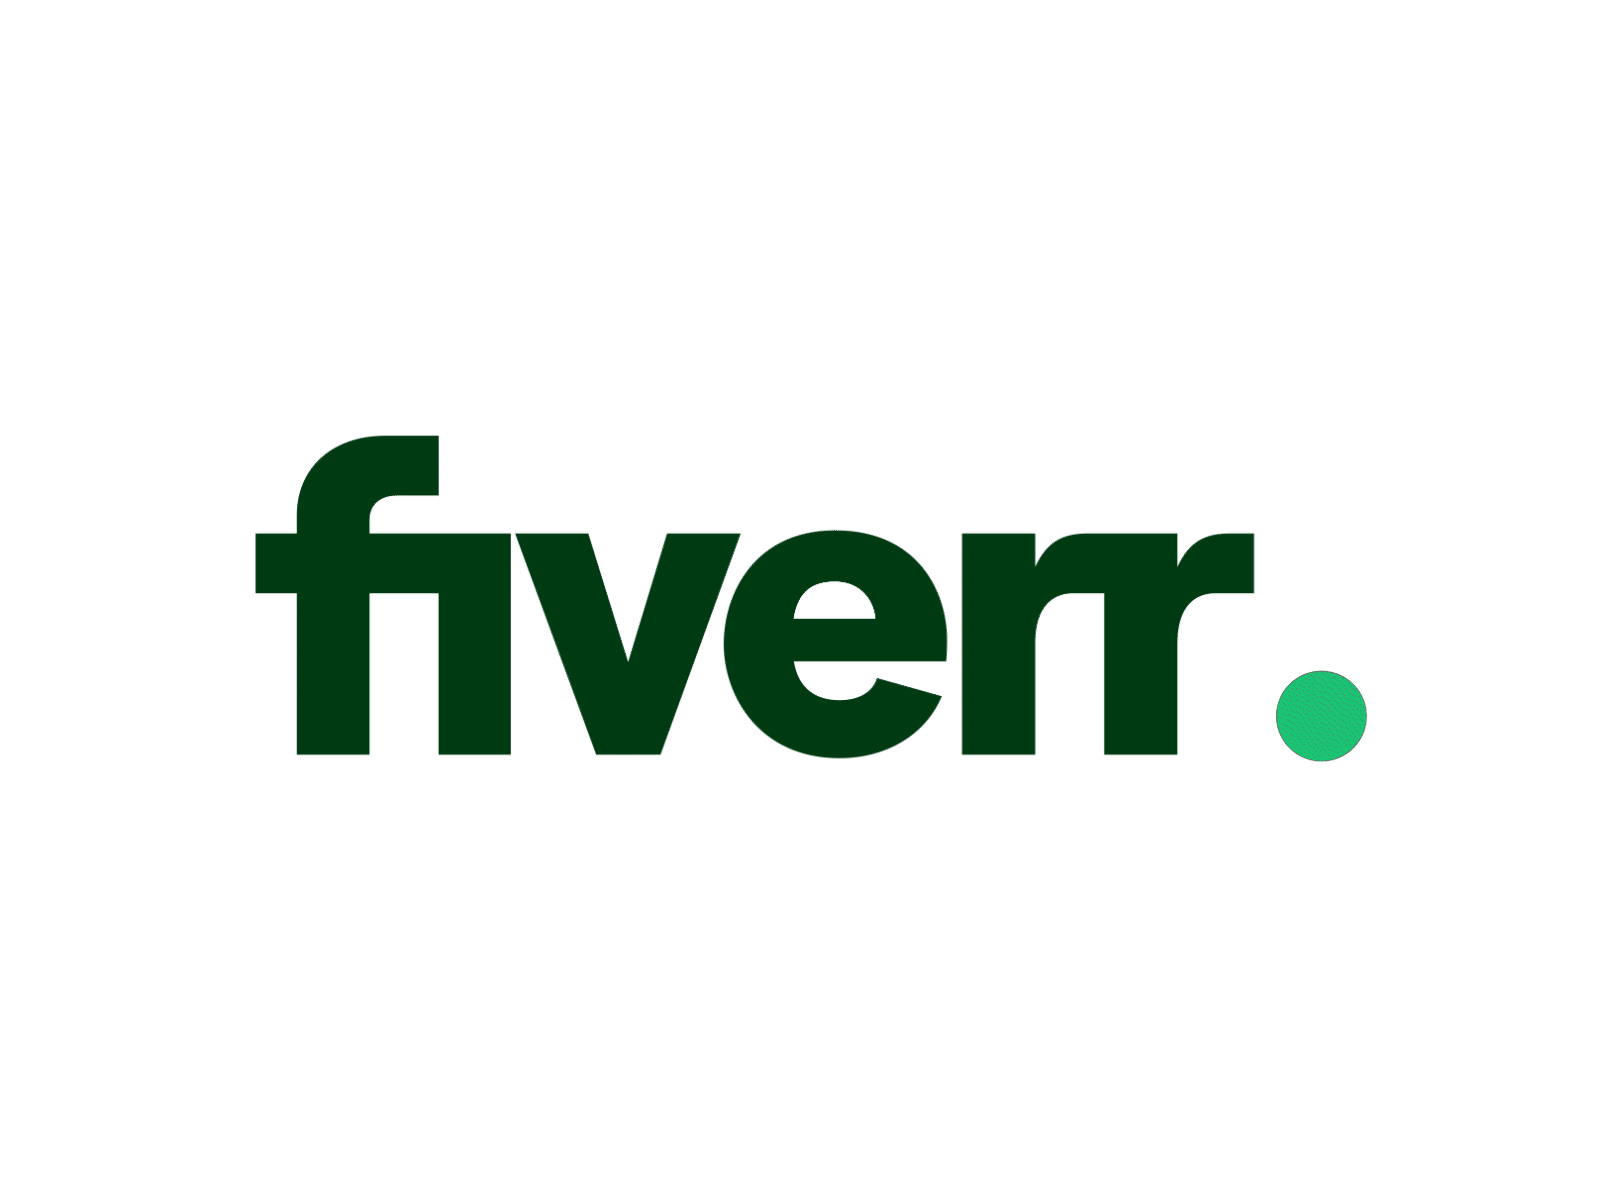 Fiverr logo animation by Abduseit Tursunov on Dribbble